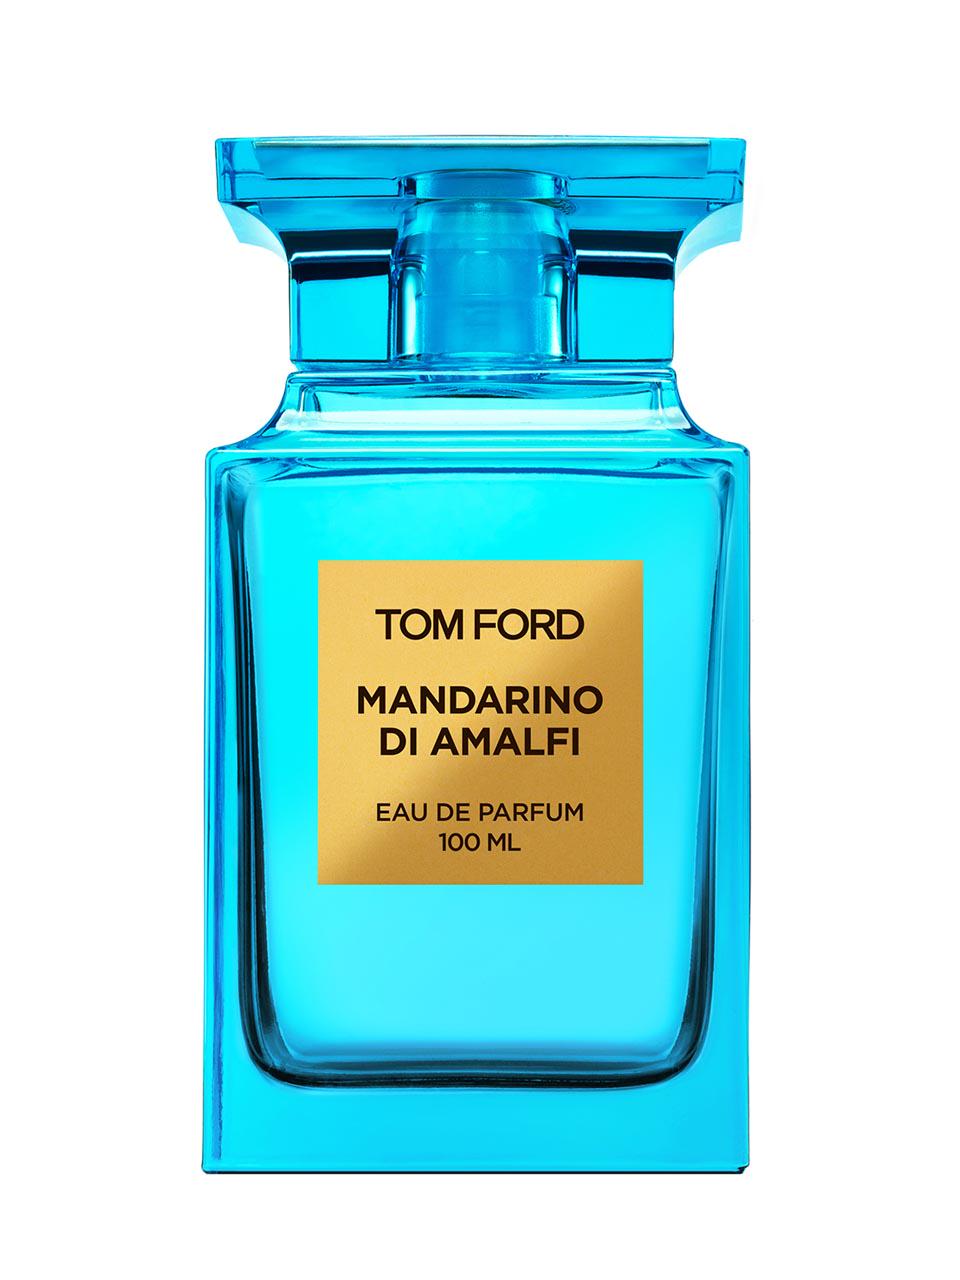 Tom Ford Private Blend Mandarino di amalfi Eau de Parfum 100 ml | Frankfurt  Airport Online Shopping